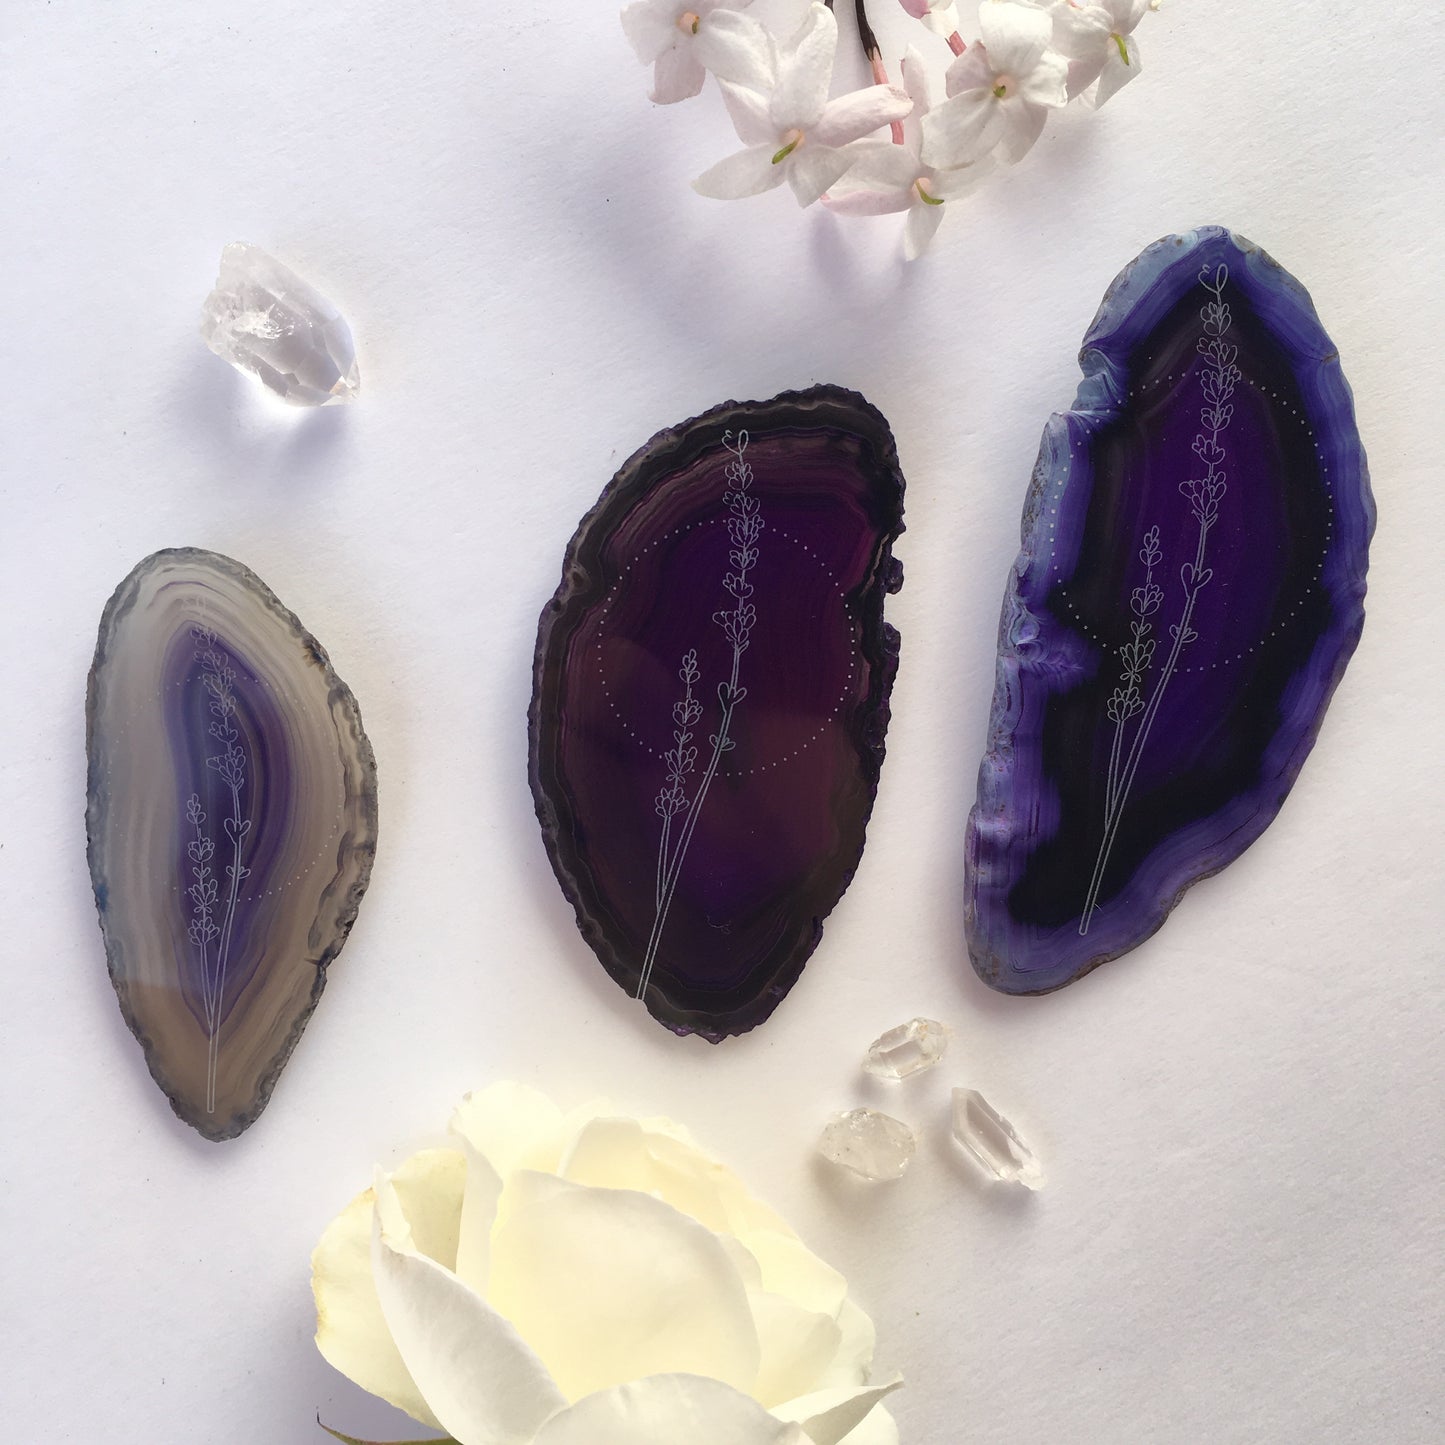 “Lavender Dreams” Lavender Flower Agate Slices - Flower Essence Collection